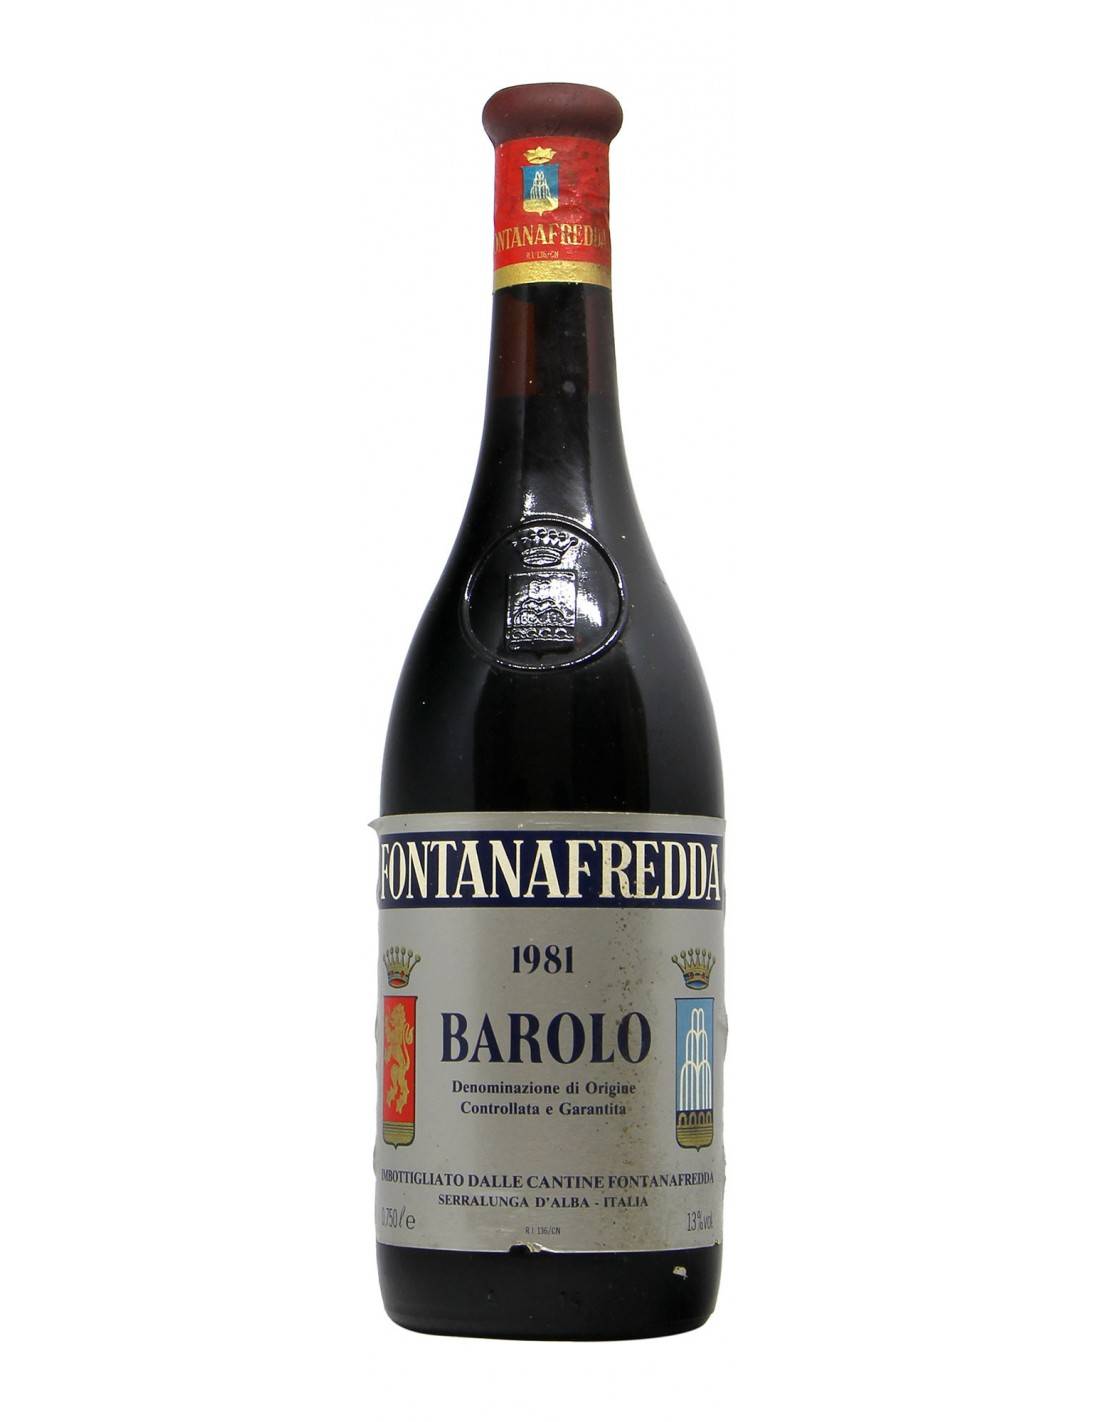 BAROLO 1981 FONTANAFREDDA Grandi Bottiglie